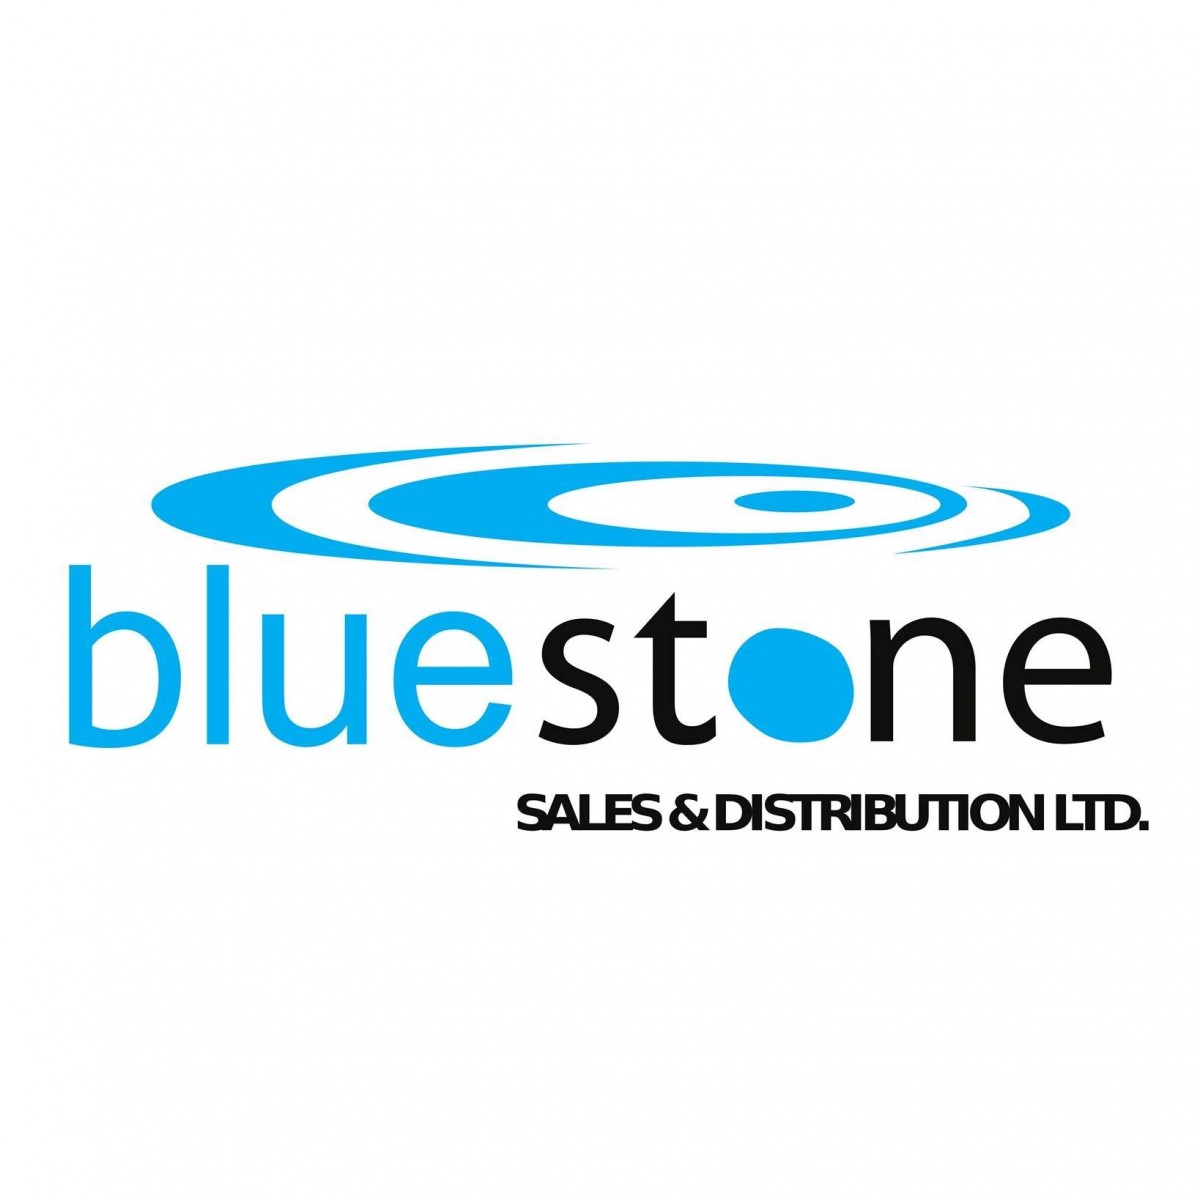 Bluestone Sales & Distribution